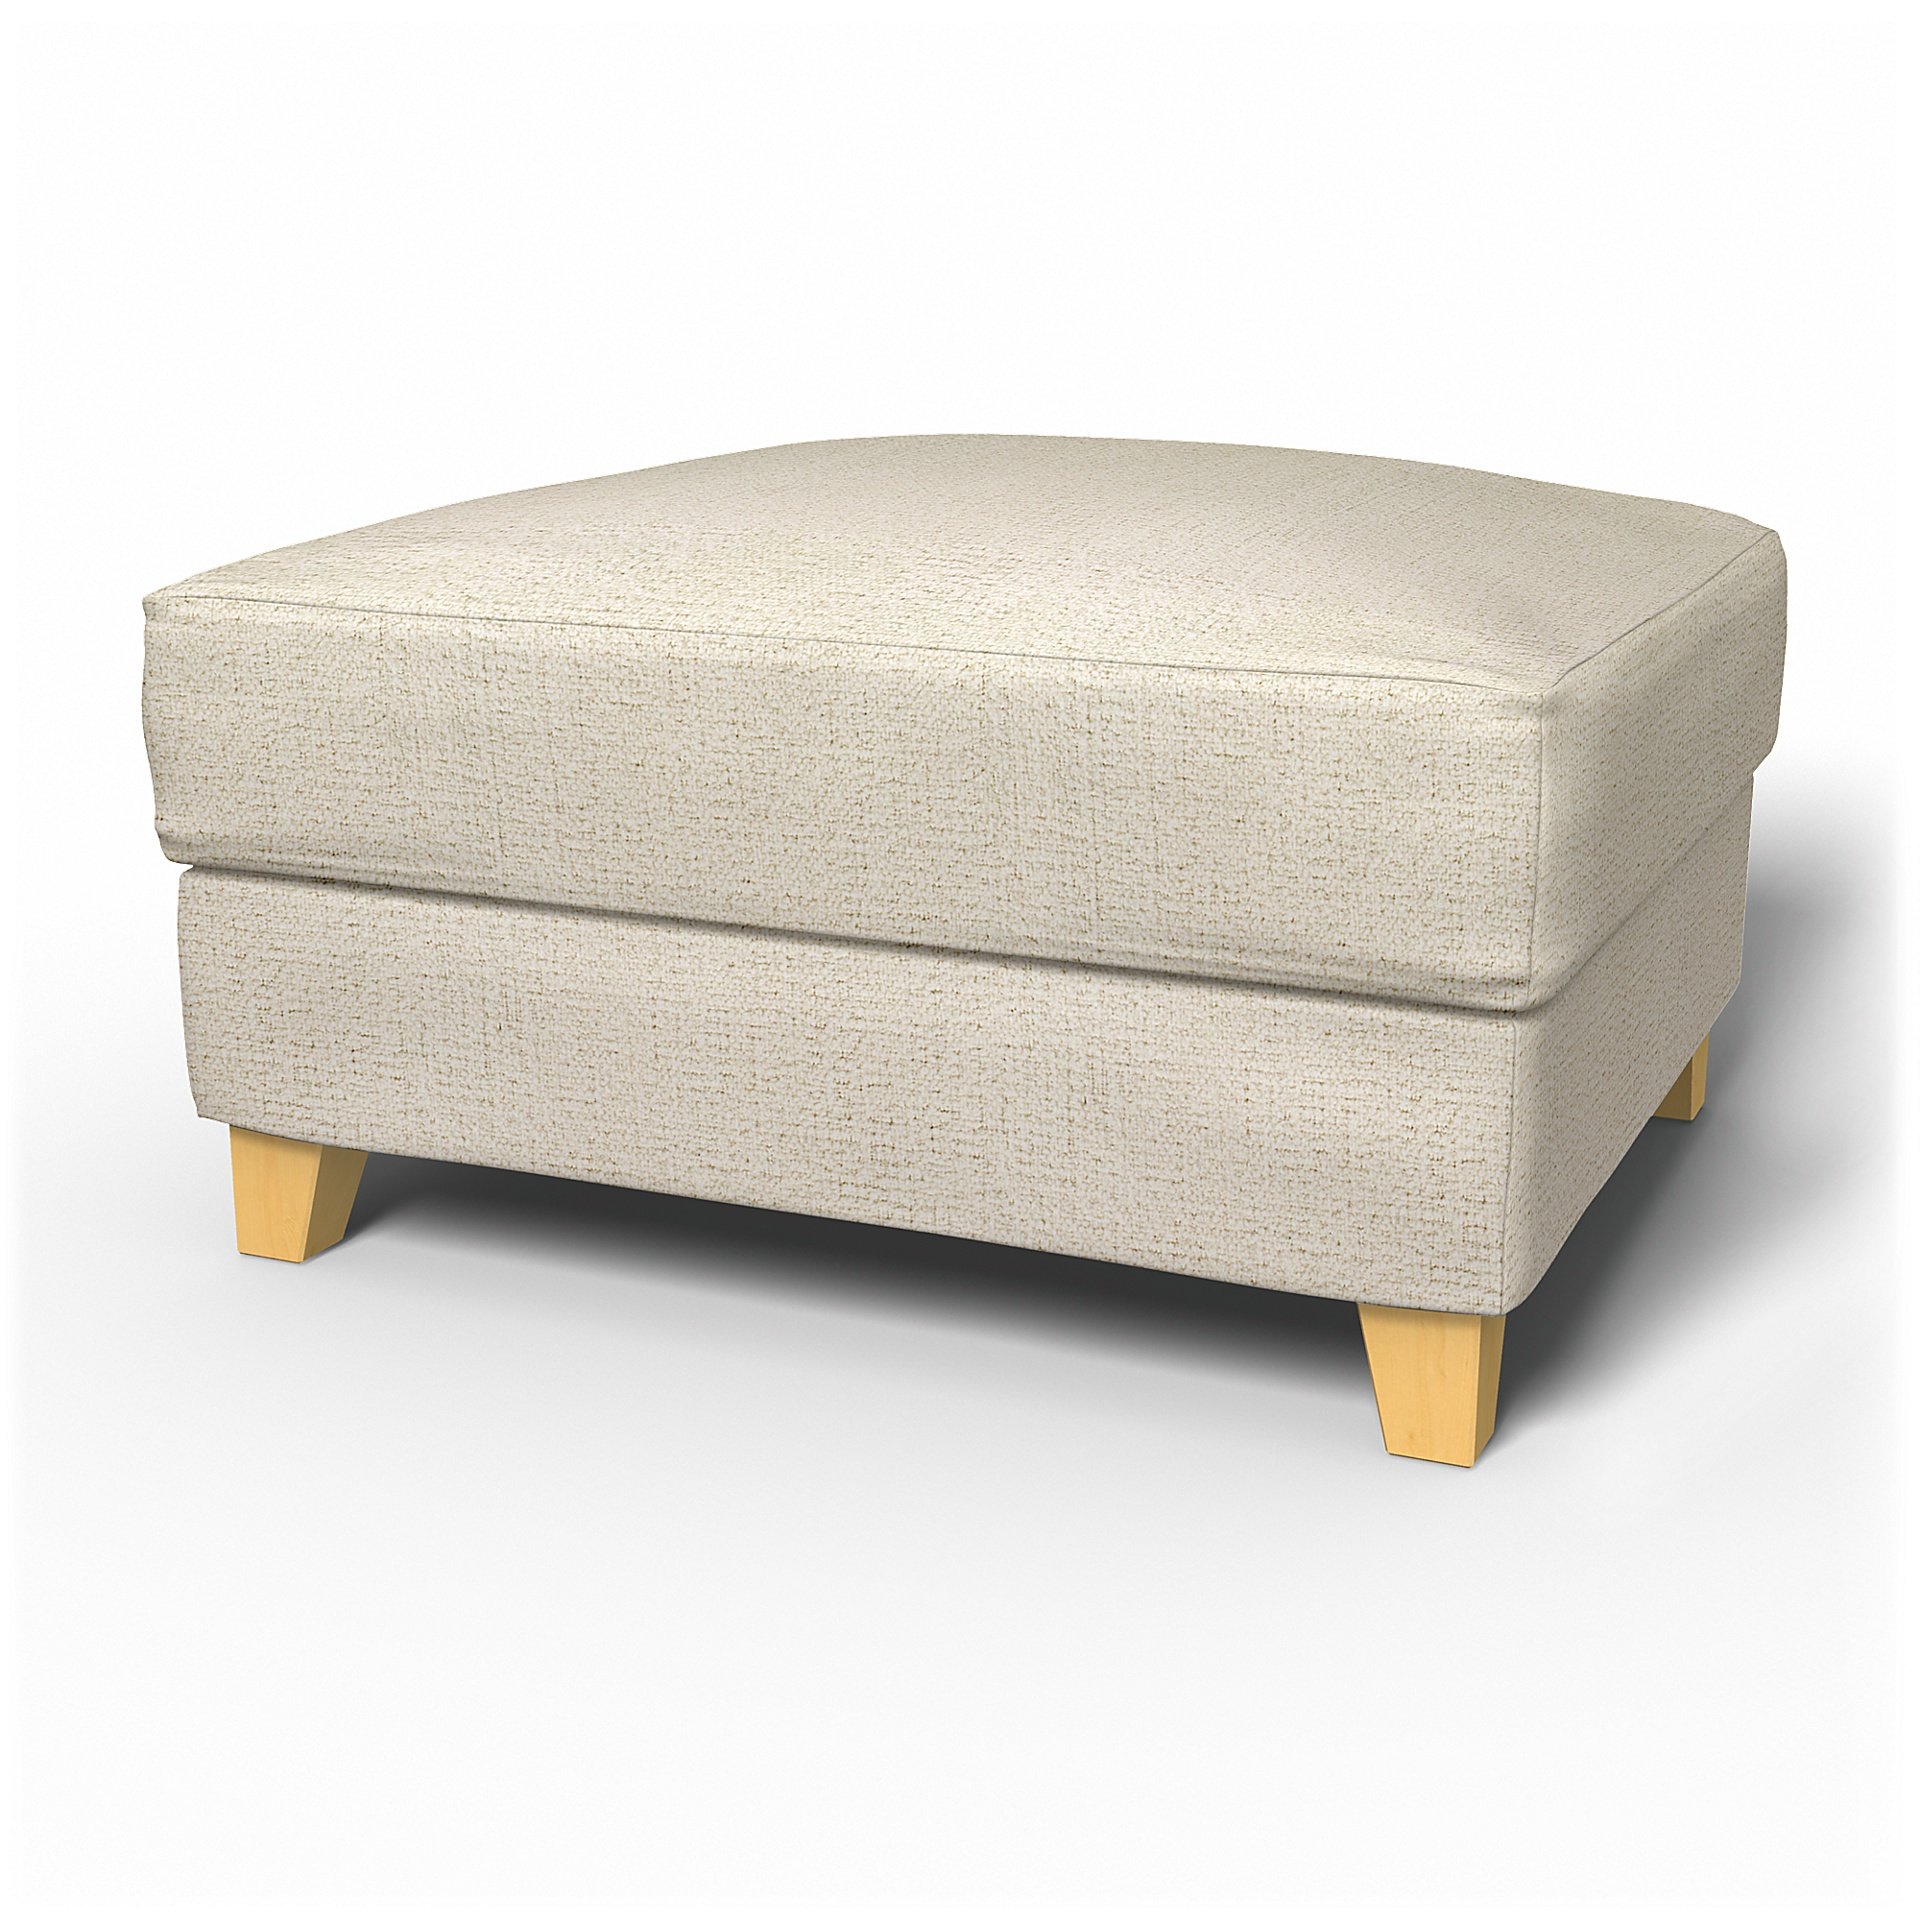 IKEA - Backa Footstool Cover, Ecru, Boucle & Texture - Bemz